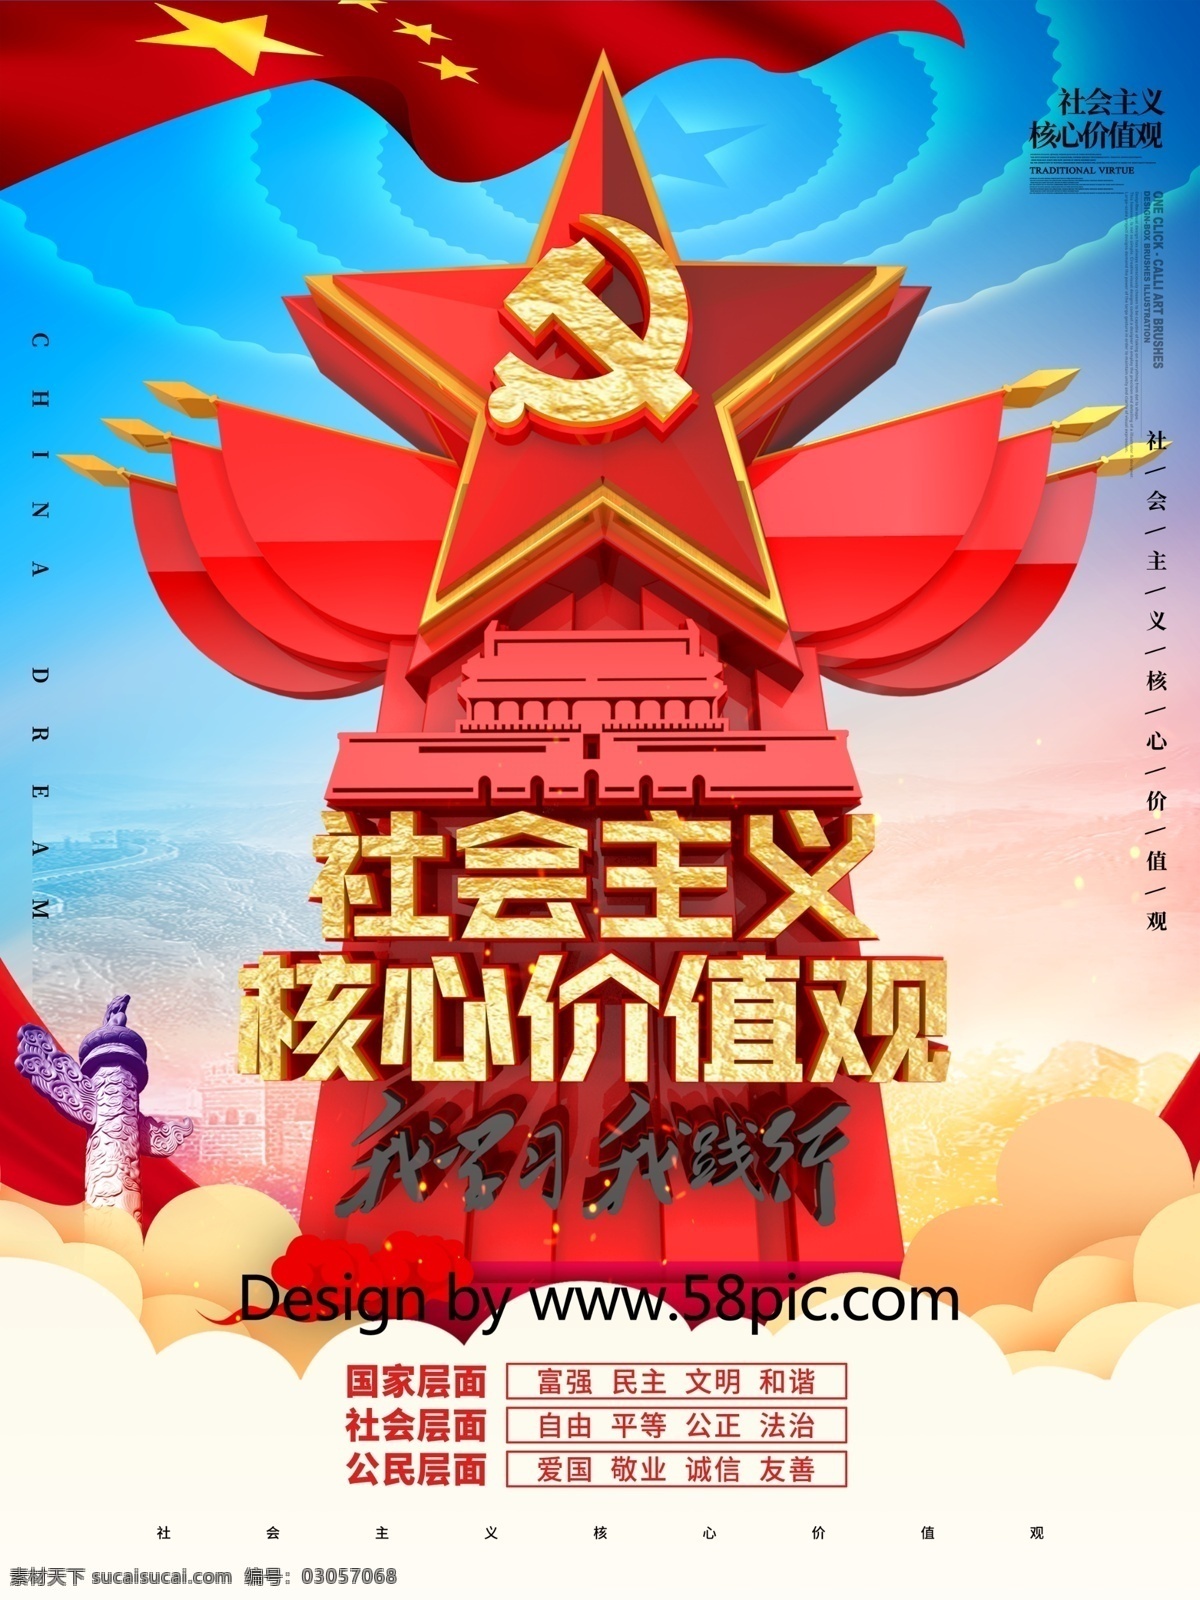 c4d 创意 立体 雕塑 造型 核心 价值观 党建 海报 社会主义 展板 核心价值观 中国梦 价值观海报 价值观展板 党建雕塑